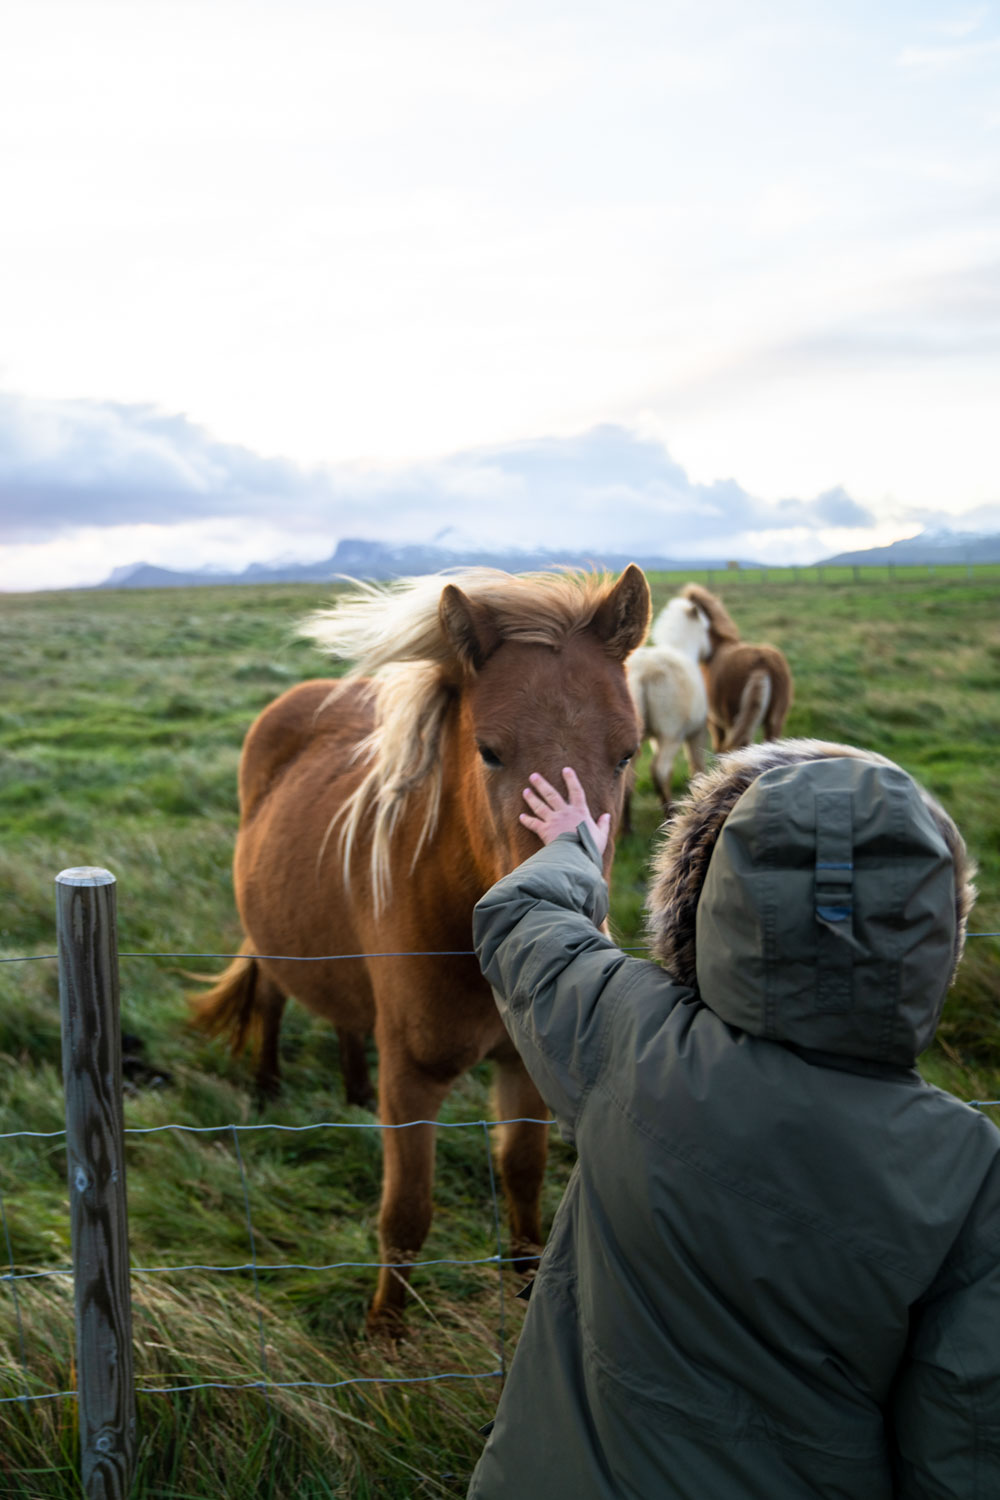 A boy wearing a raincoat pats a horse in a field